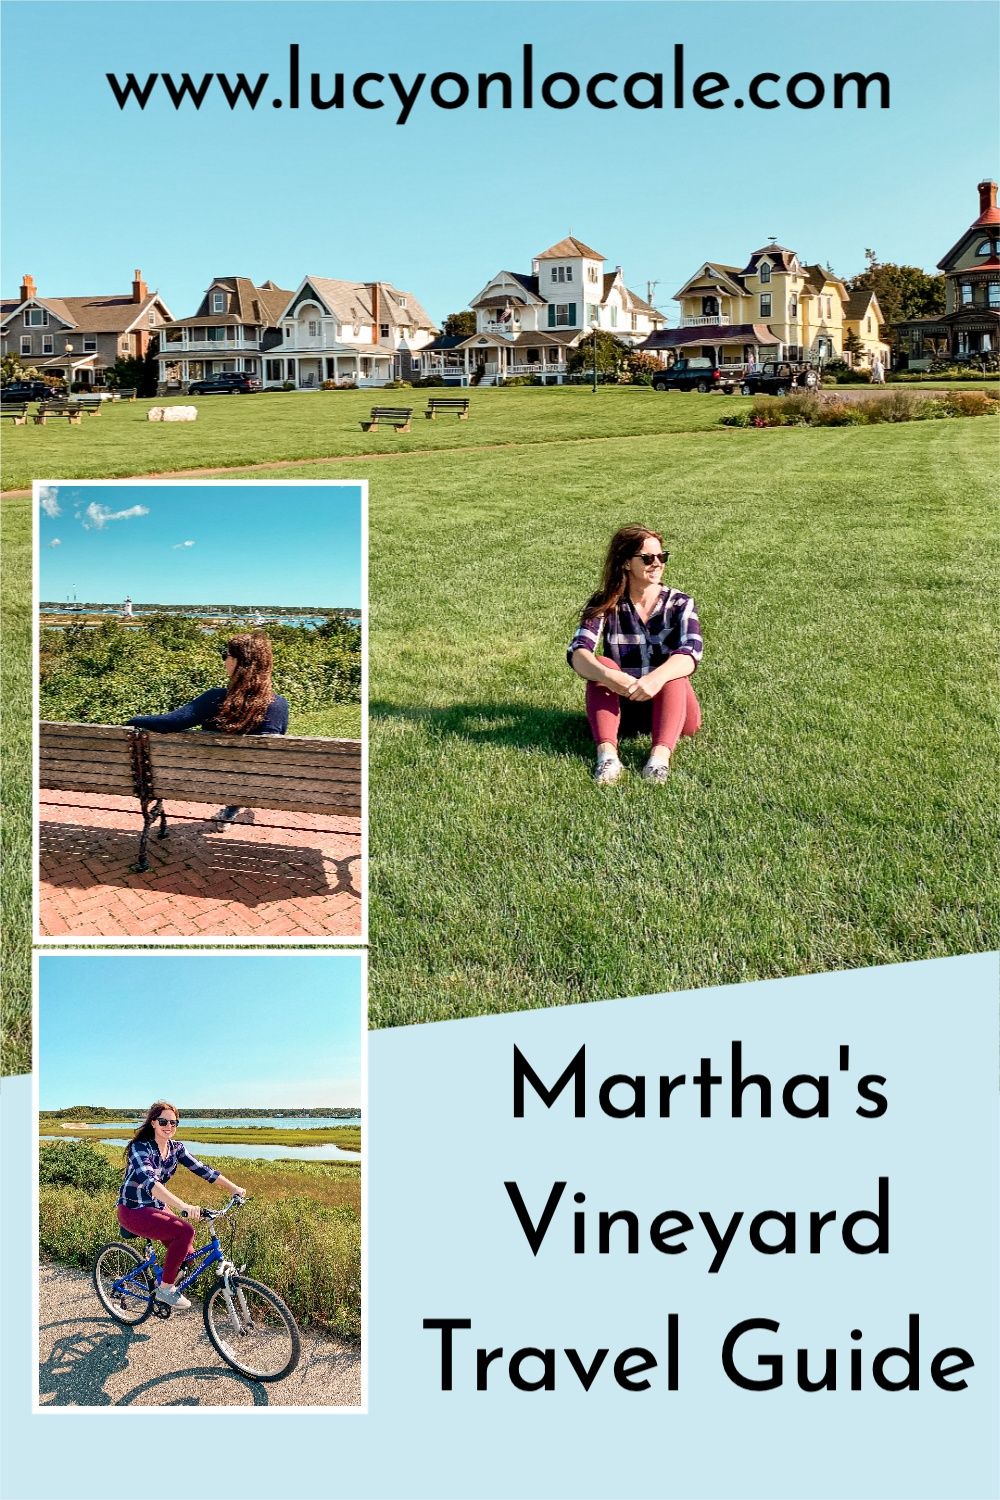 Martha's Vineyard Travel Guide